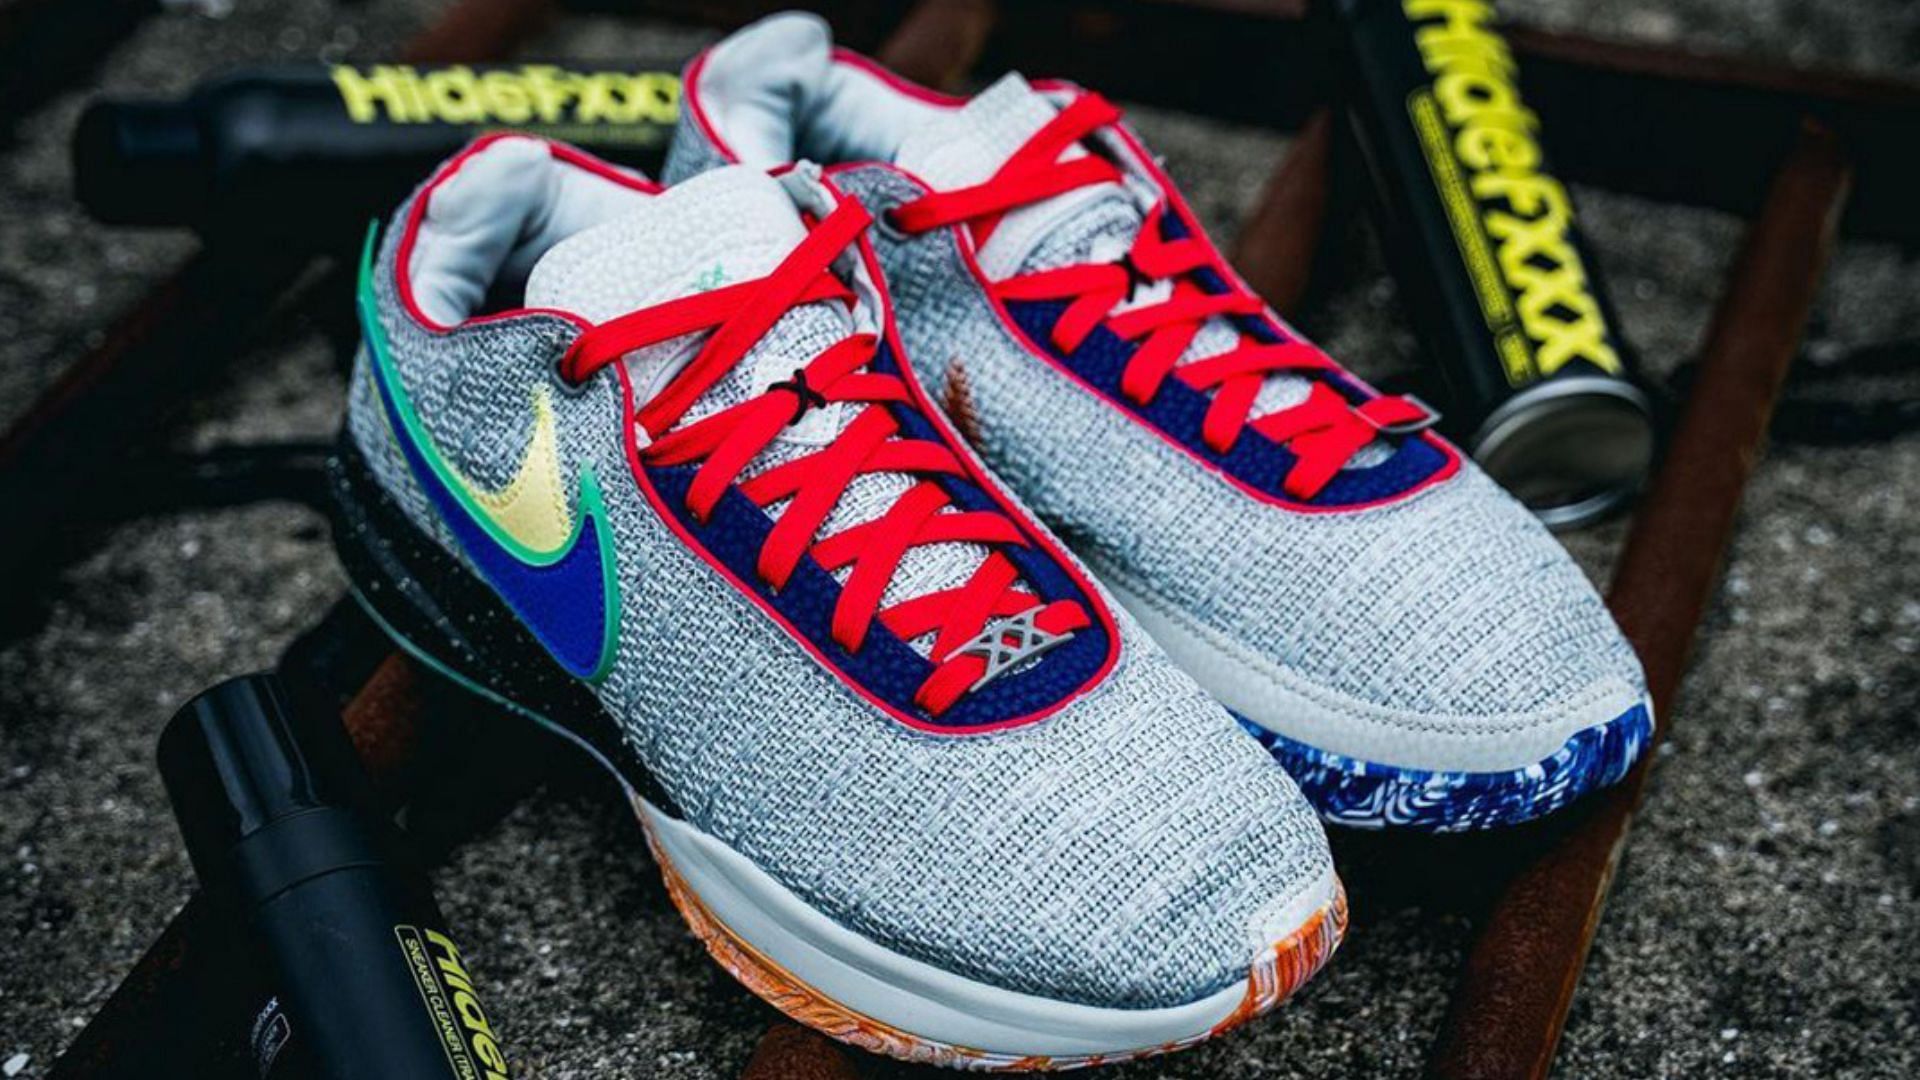 Nike LeBron 20 Galaxy edition (Image via Instagram/@knowing_kicks)